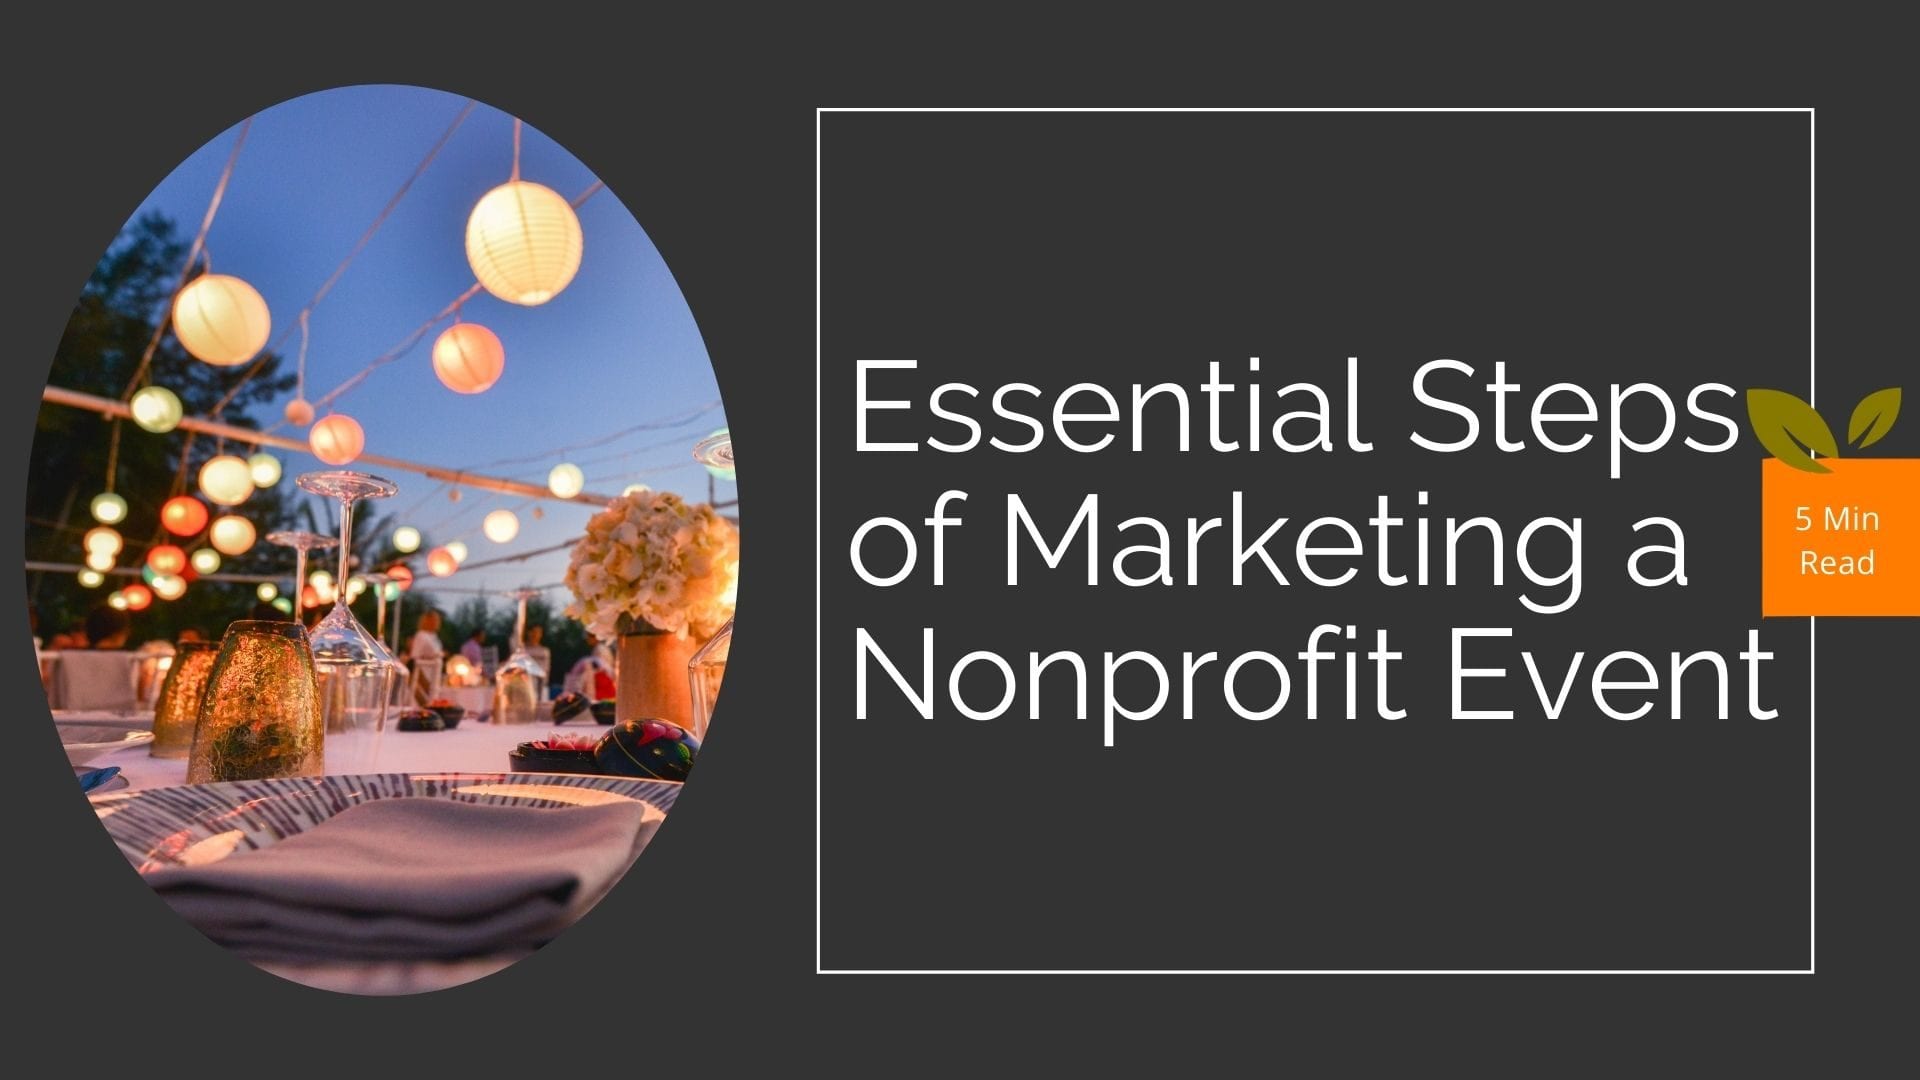 Nonprofit Event Marketing